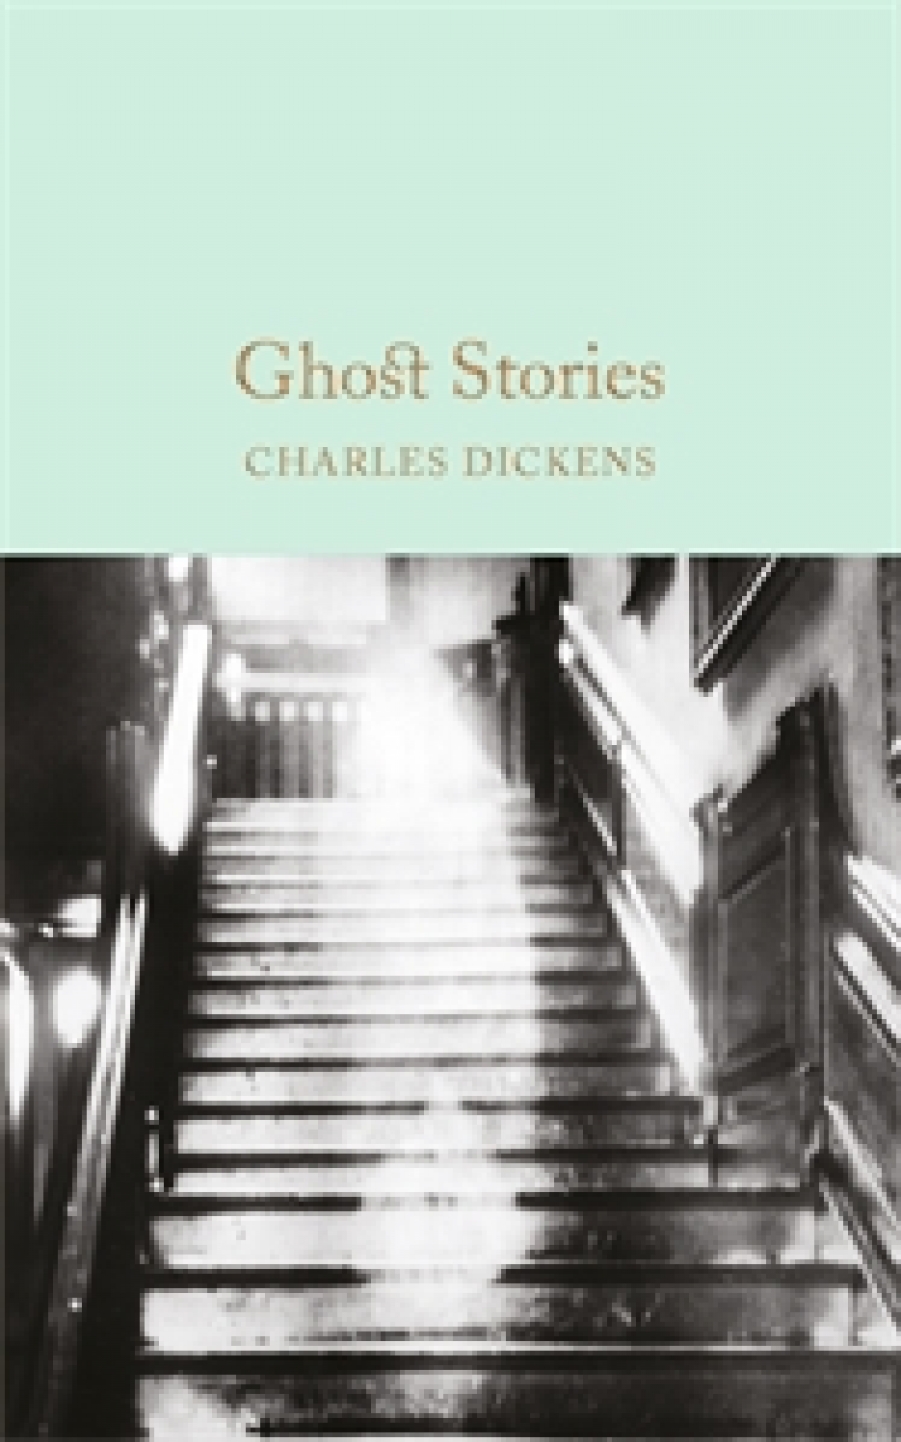 Dickens Charles Ghost Stories 